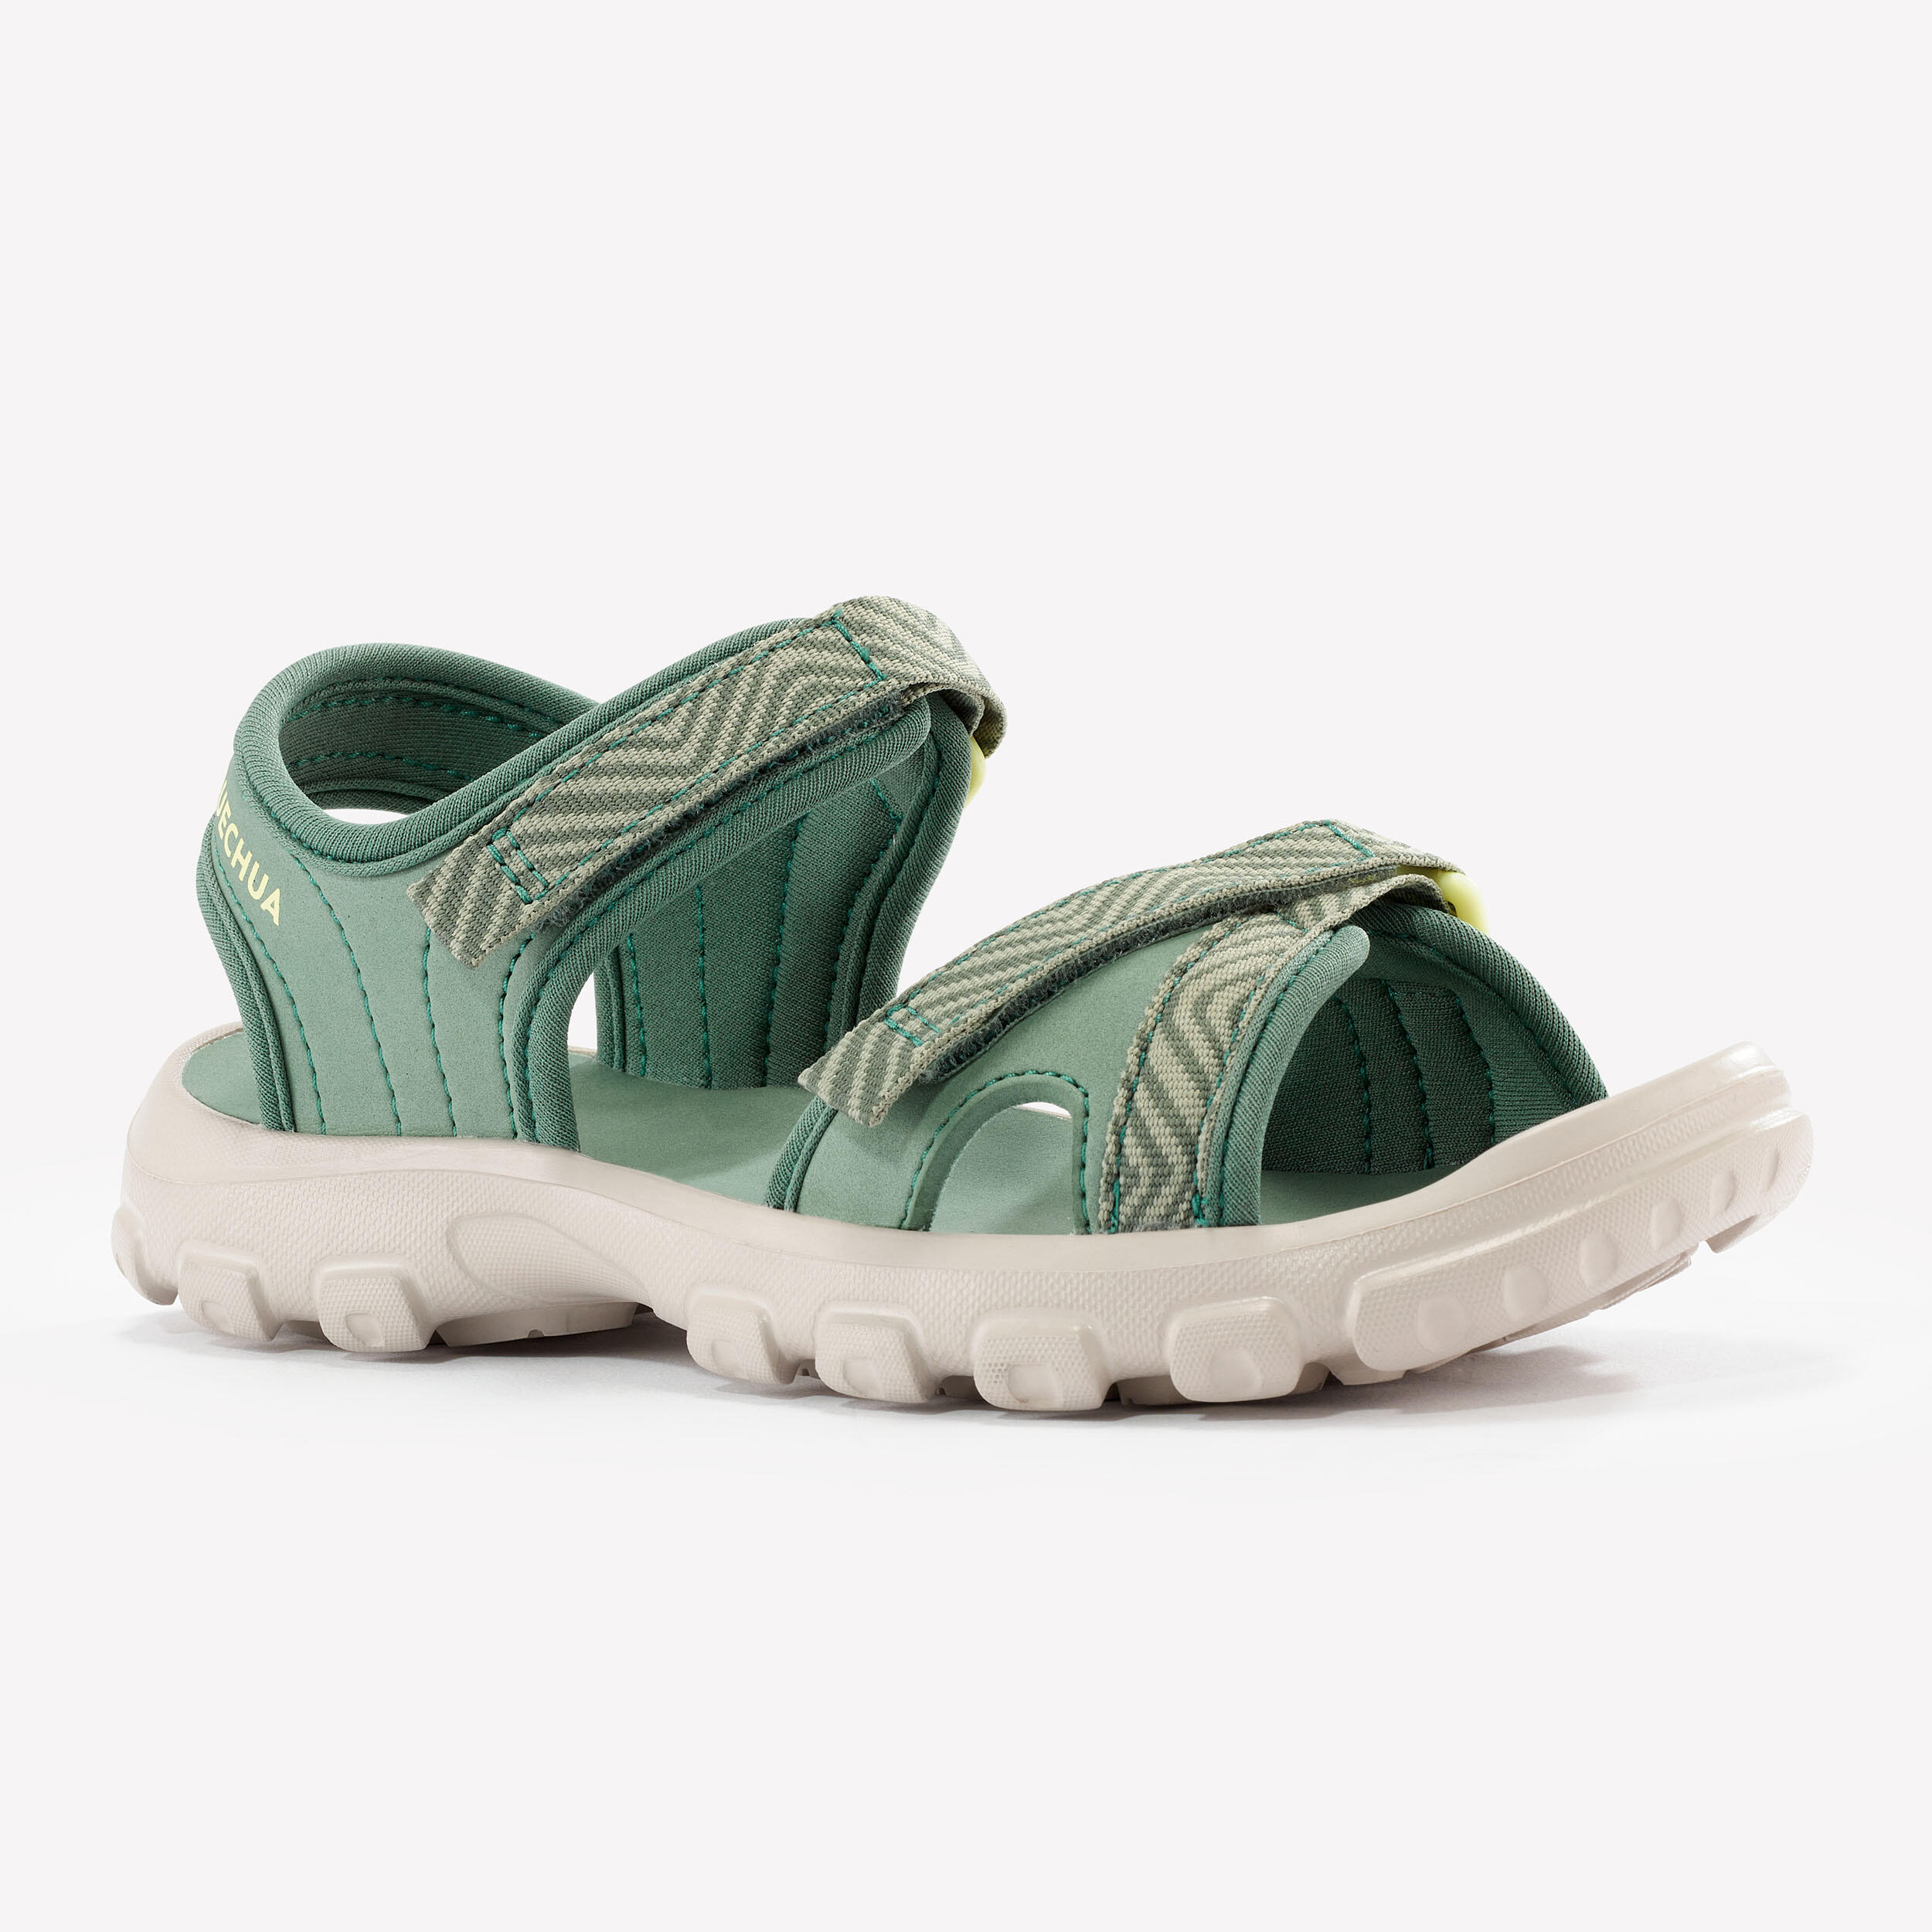 Kids’ Hiking Sandals  - NH100 - UK Kids size 6.5 to 12.5 - Khaki 1/10